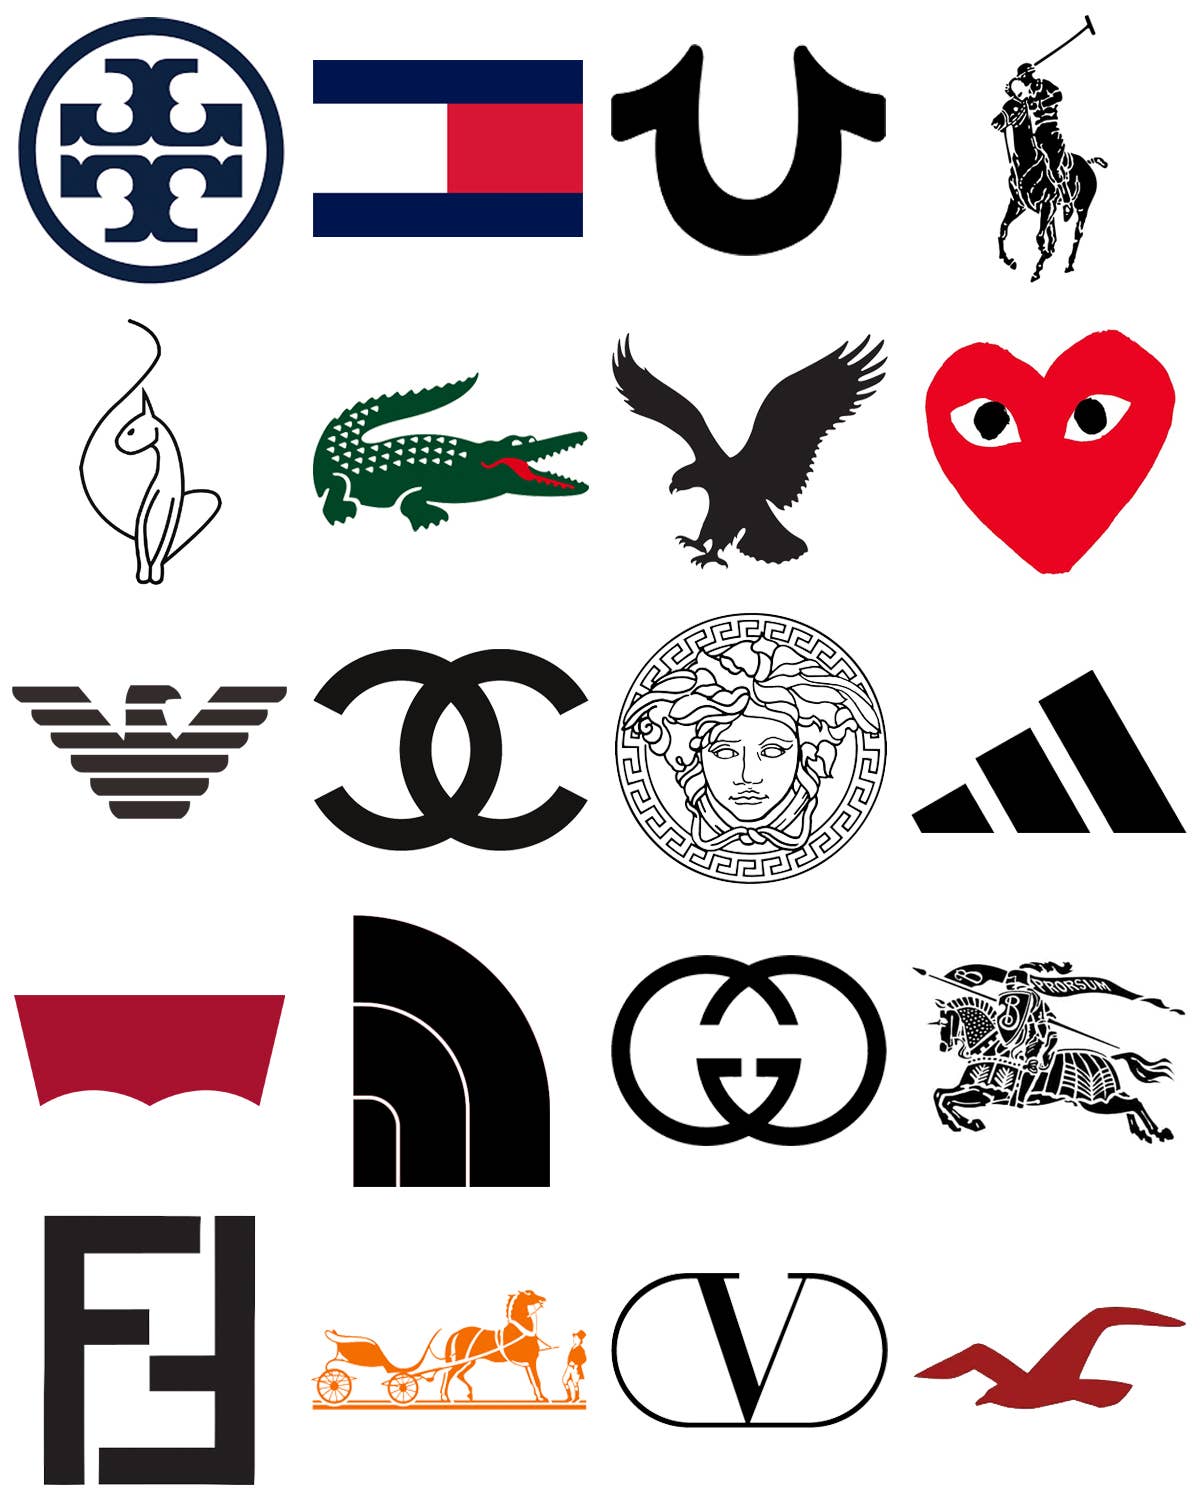 Spanish Clothing Brands Logos | Bruin Blog